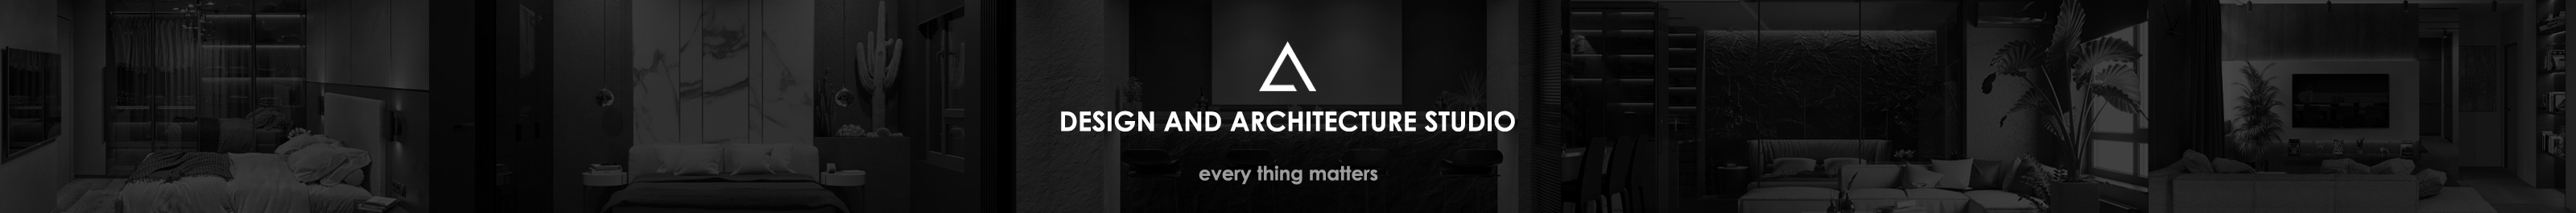 Баннер профиля AG Architecture